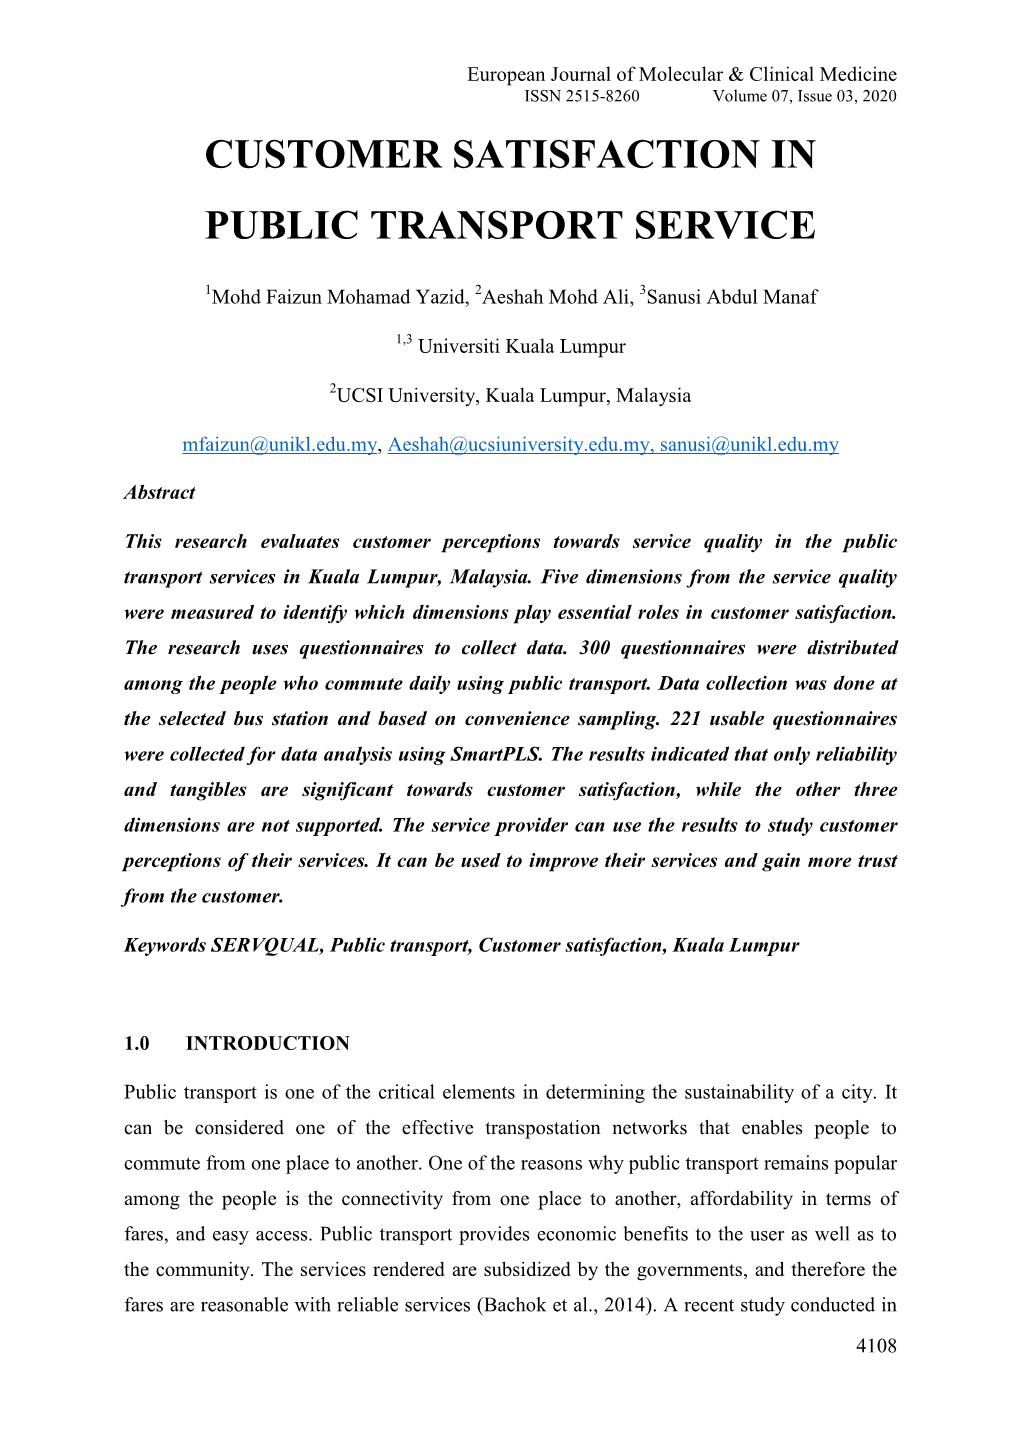 Customer Satisfaction in Public Transport Service